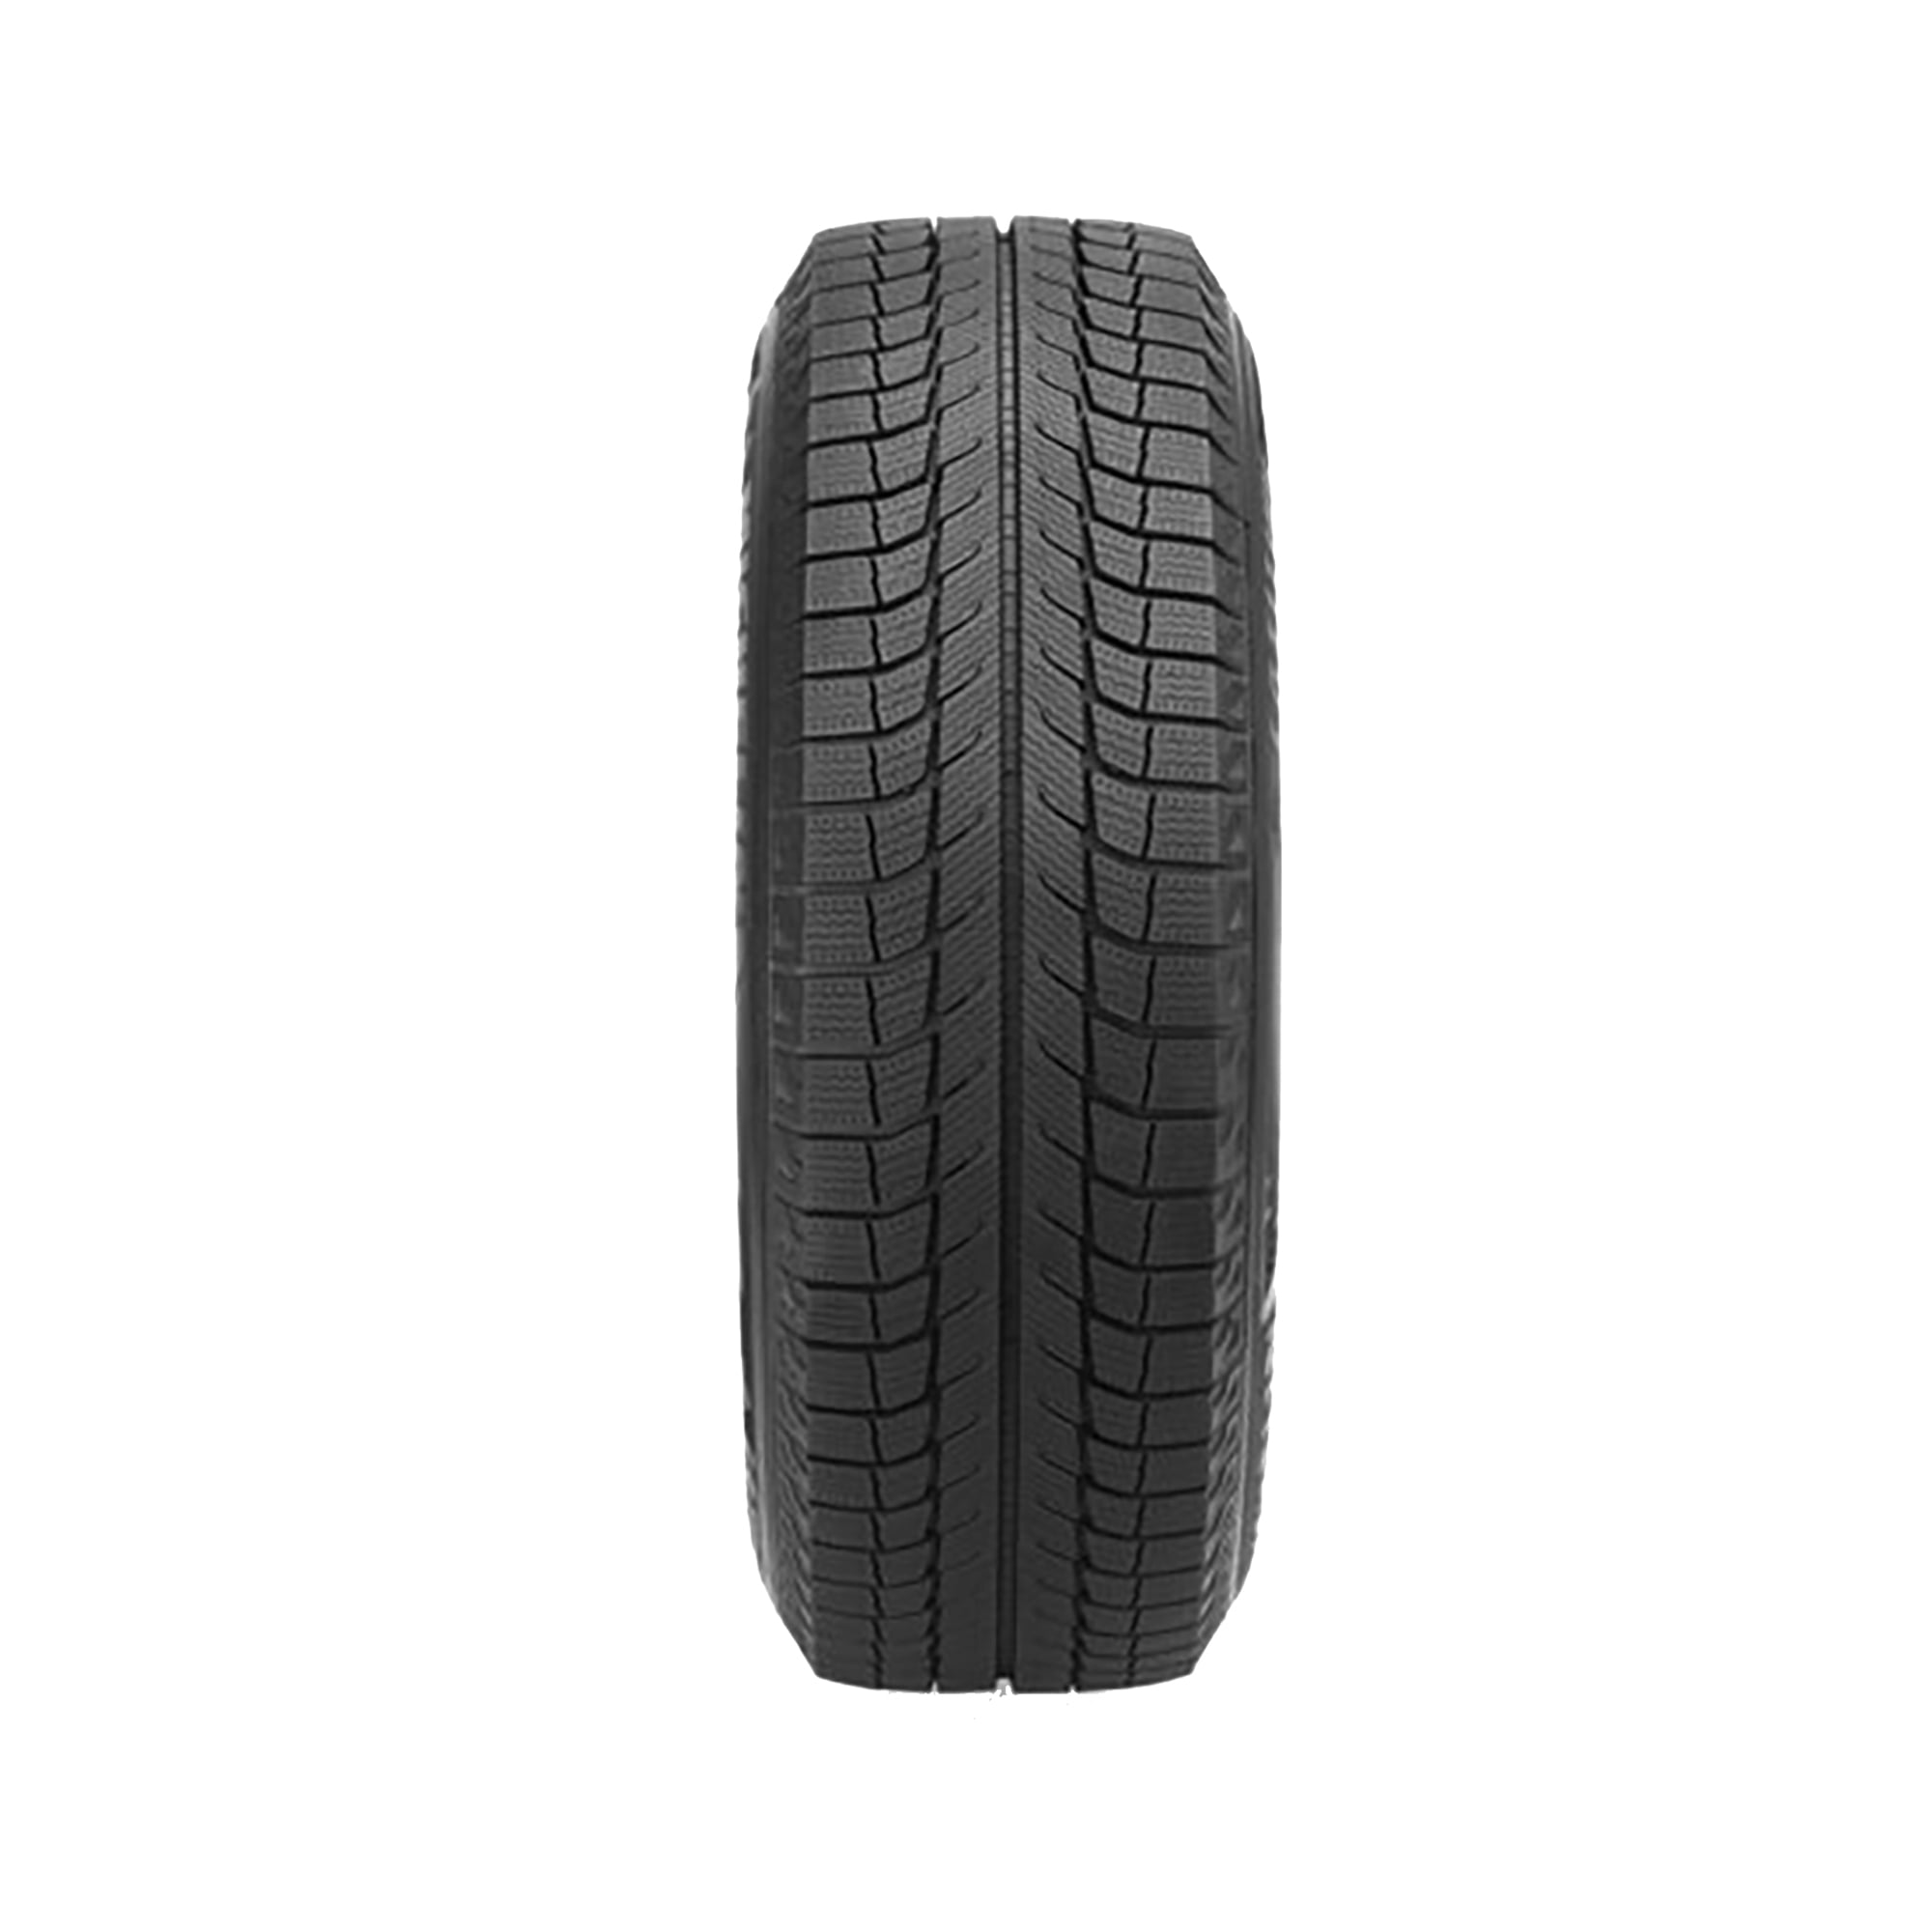 Michelin Latitude X-Ice Xi2 235/65R18 106 T Tire. - Walmart.com